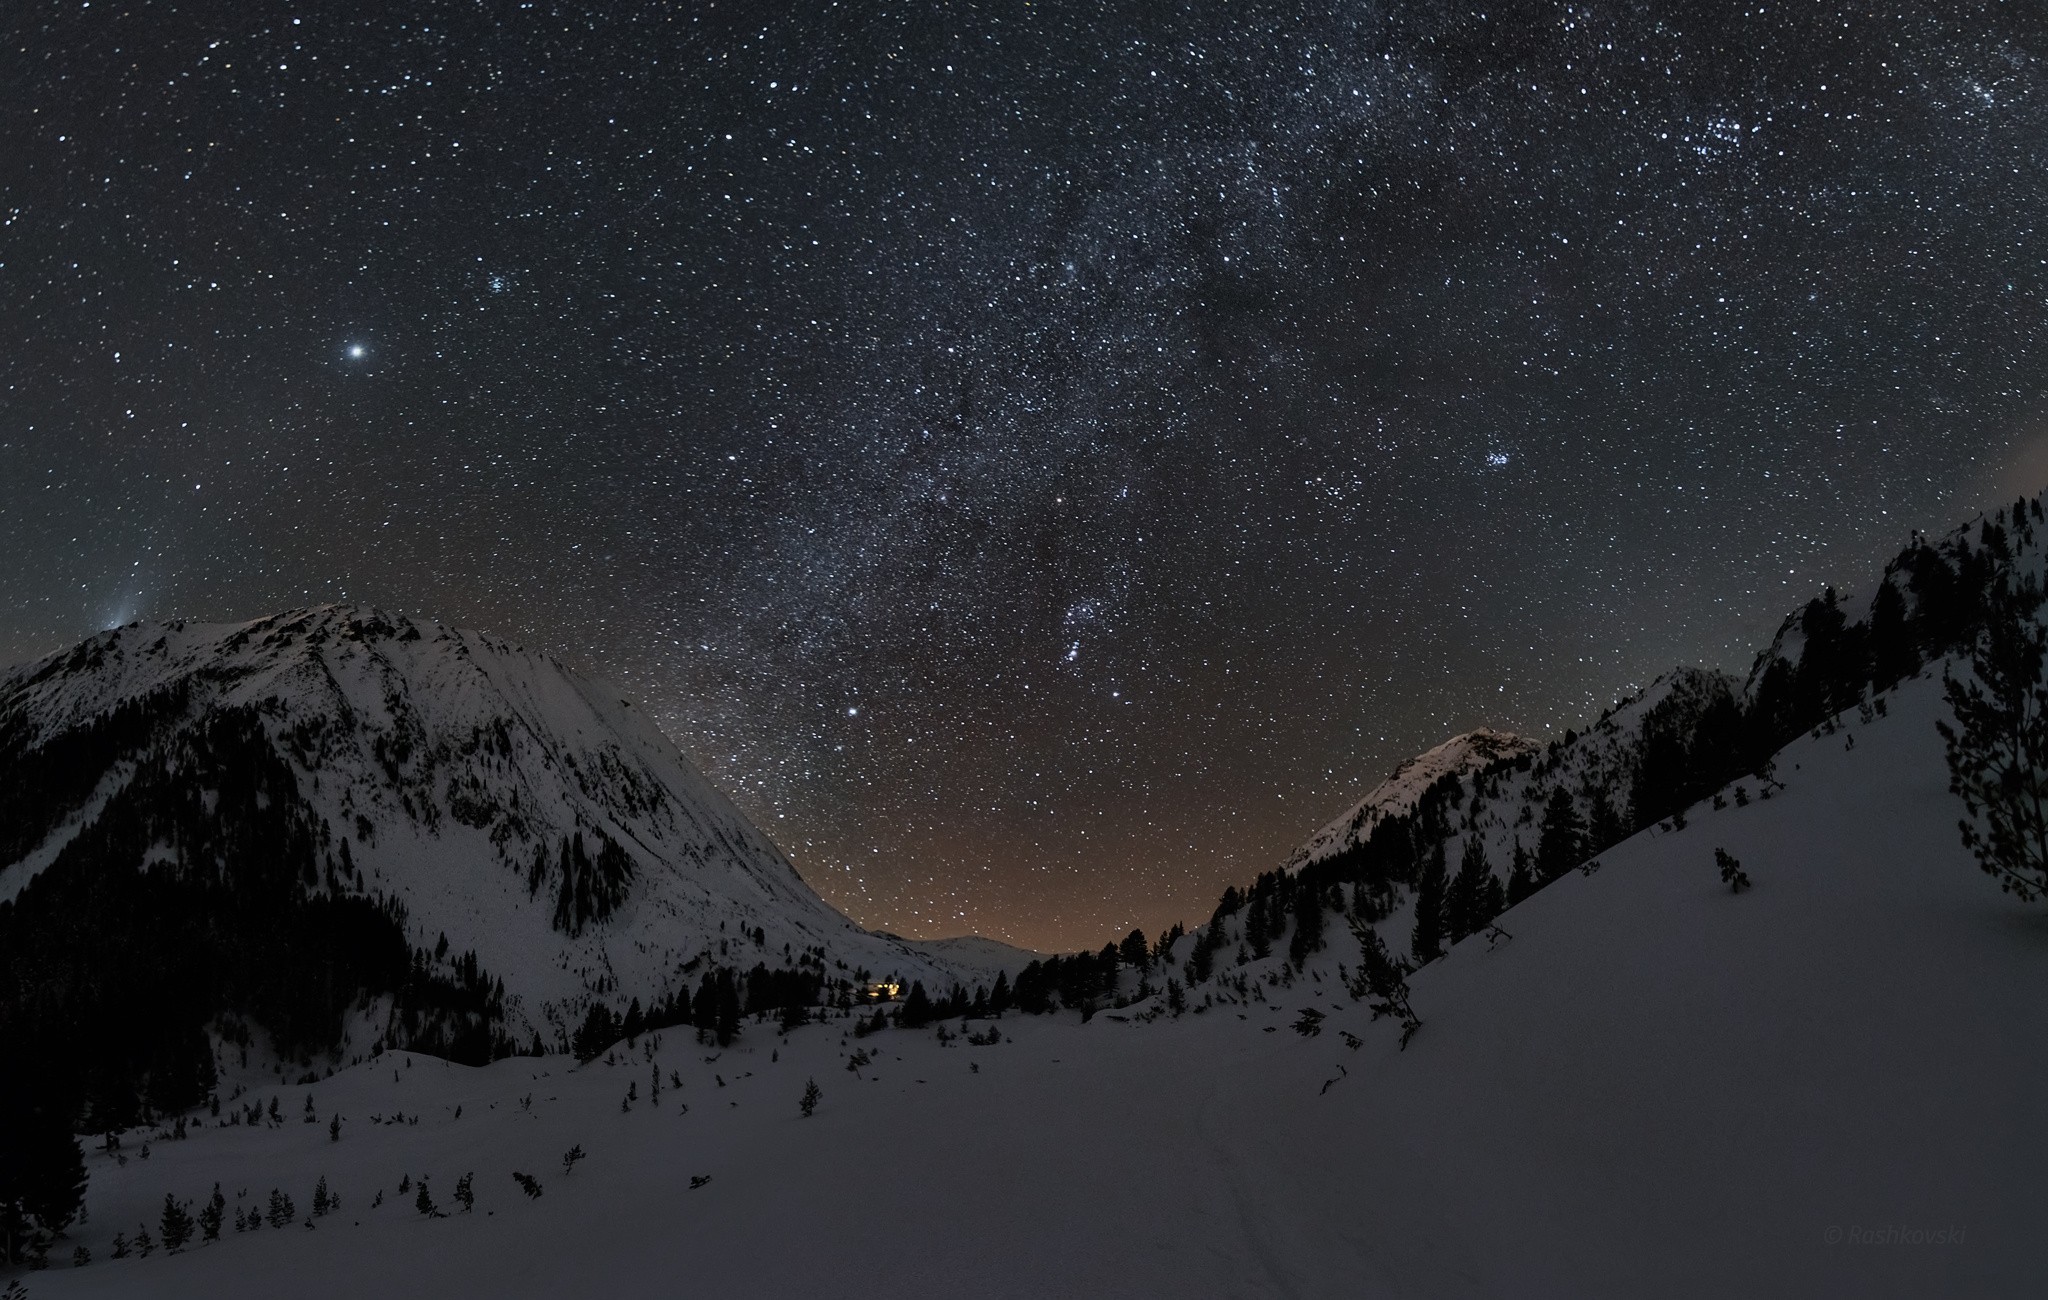 General 2048x1300 landscape stars mountains nature sky winter night snowy mountain snowy peak low light